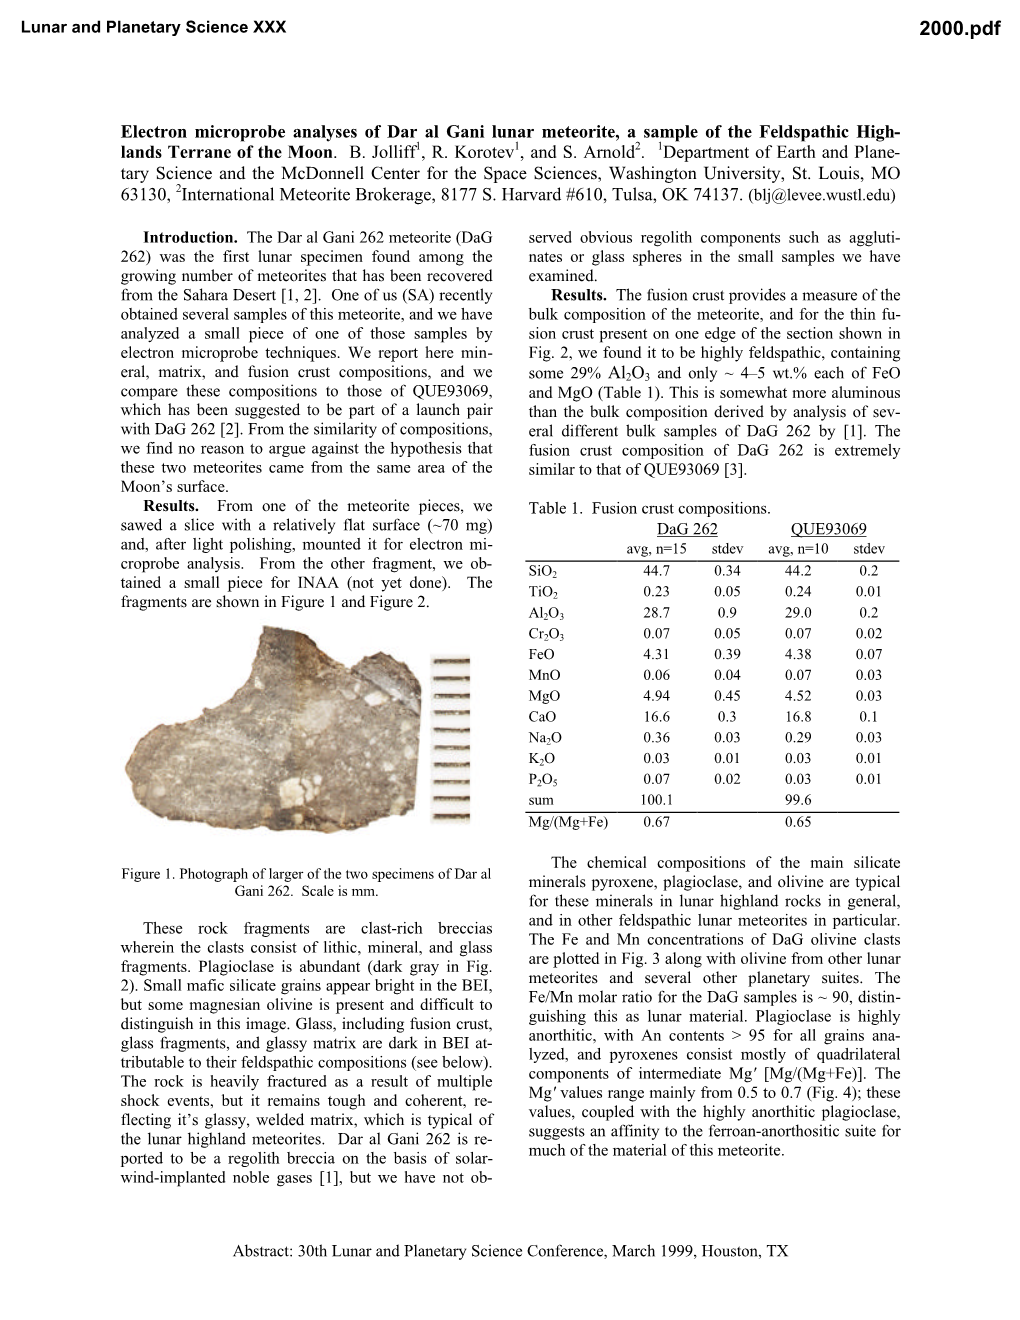 Electron Microprobe Analyses of Dar Al Gani Lunar Meteorite, a Sample of the Feldspathic High- Lands Terrane of the Moon